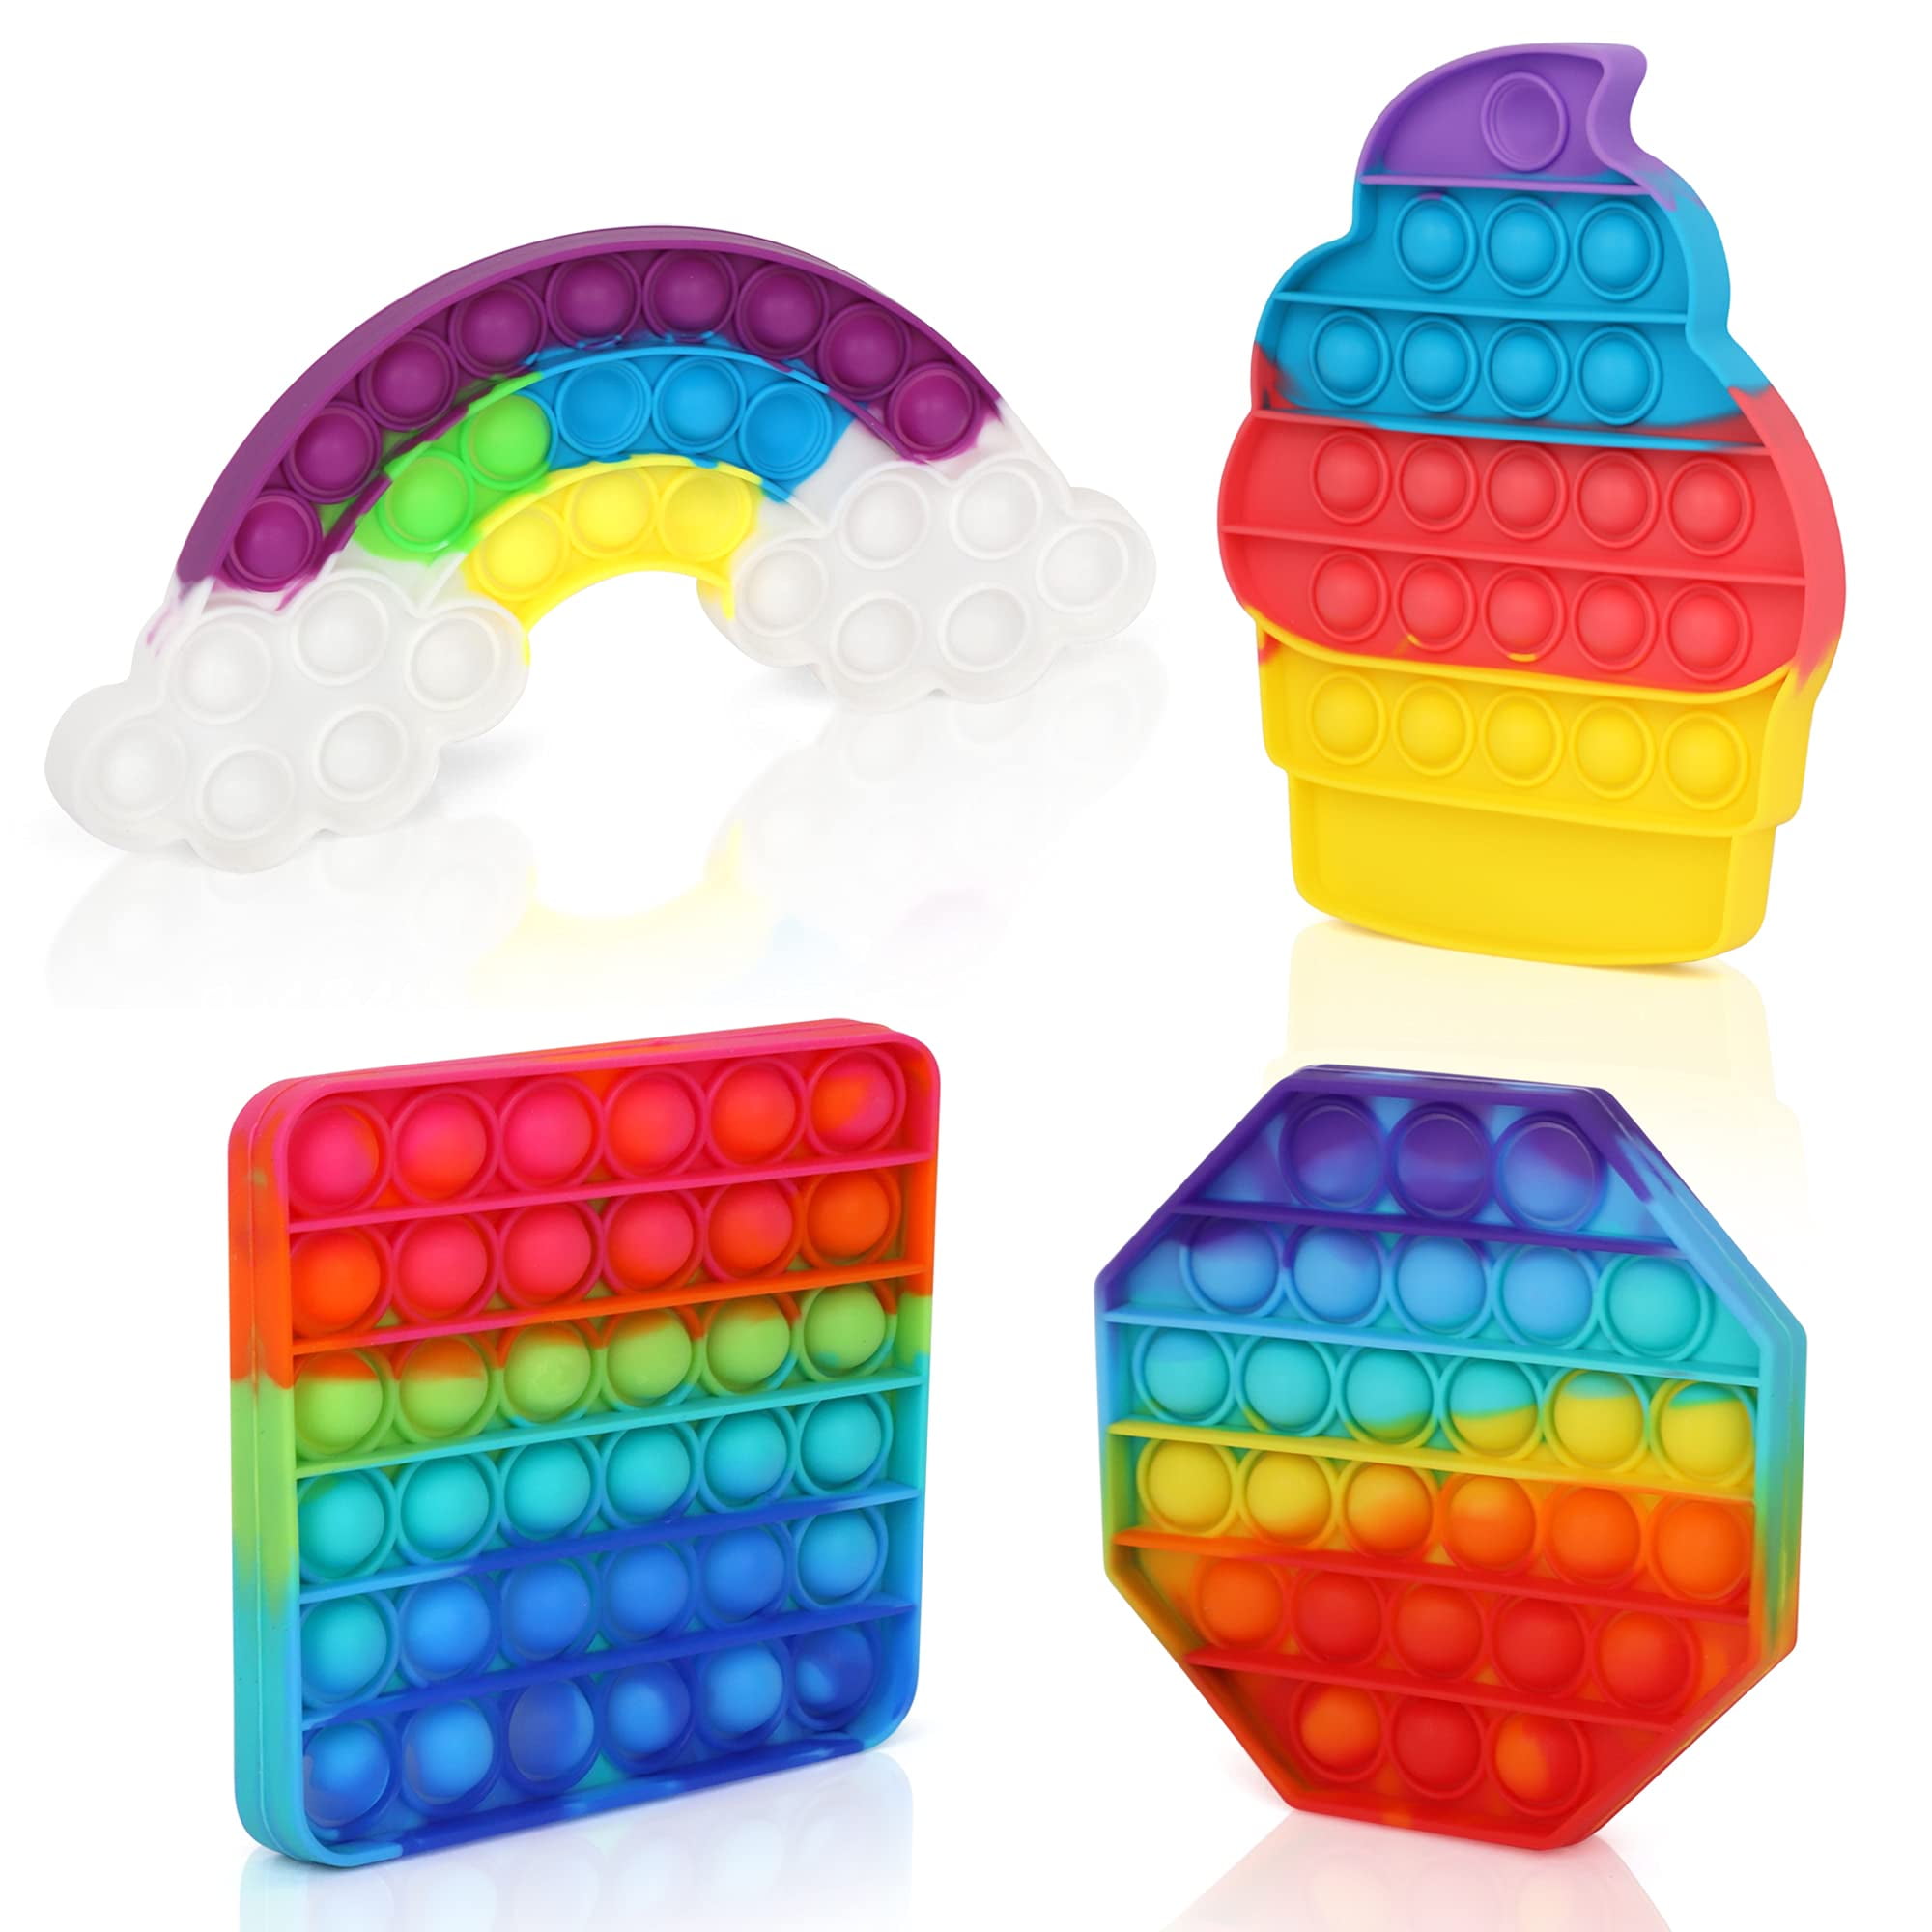 Happy Kids Rainbow Square Push & Pop Fidget Toy - It features 6